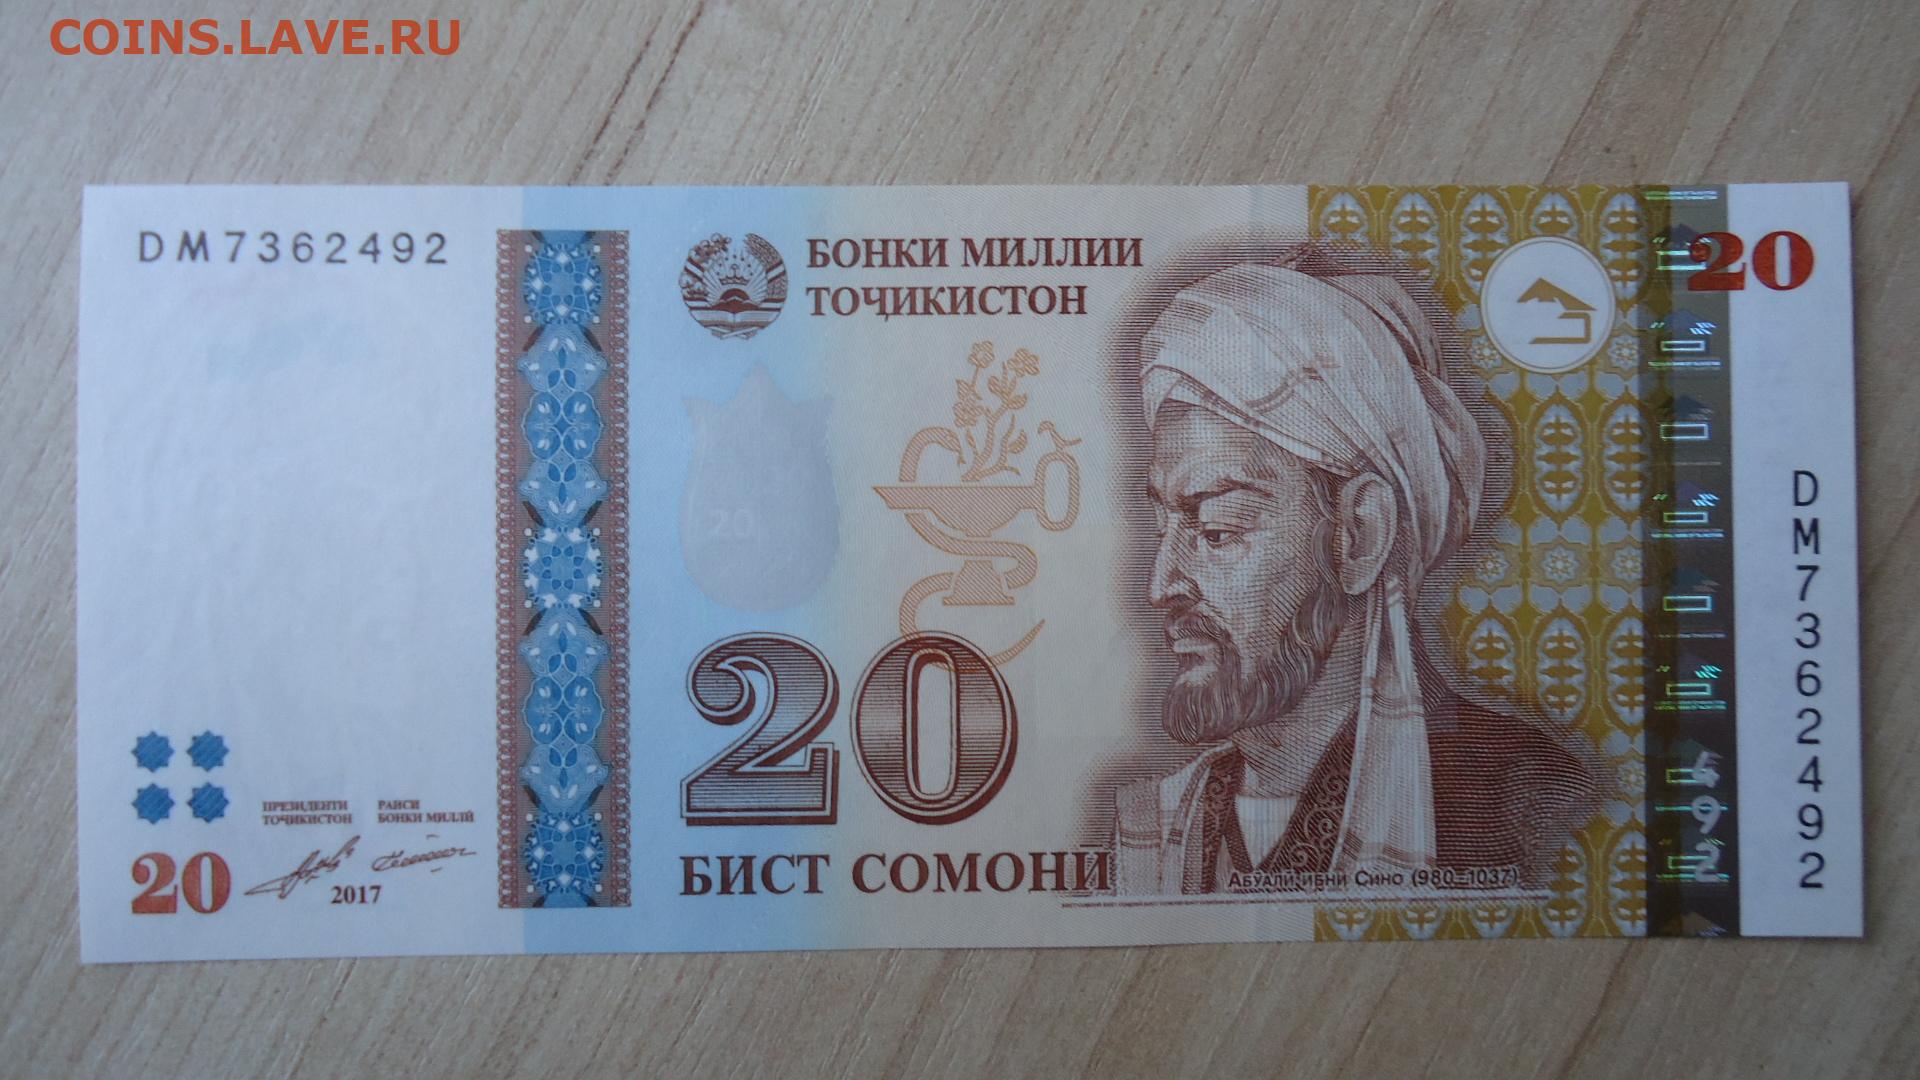 Сомони в сумах. Таджикский Сомони. Деньги Таджикистана. 20 Сомони. 20 Таджикистанских денег.